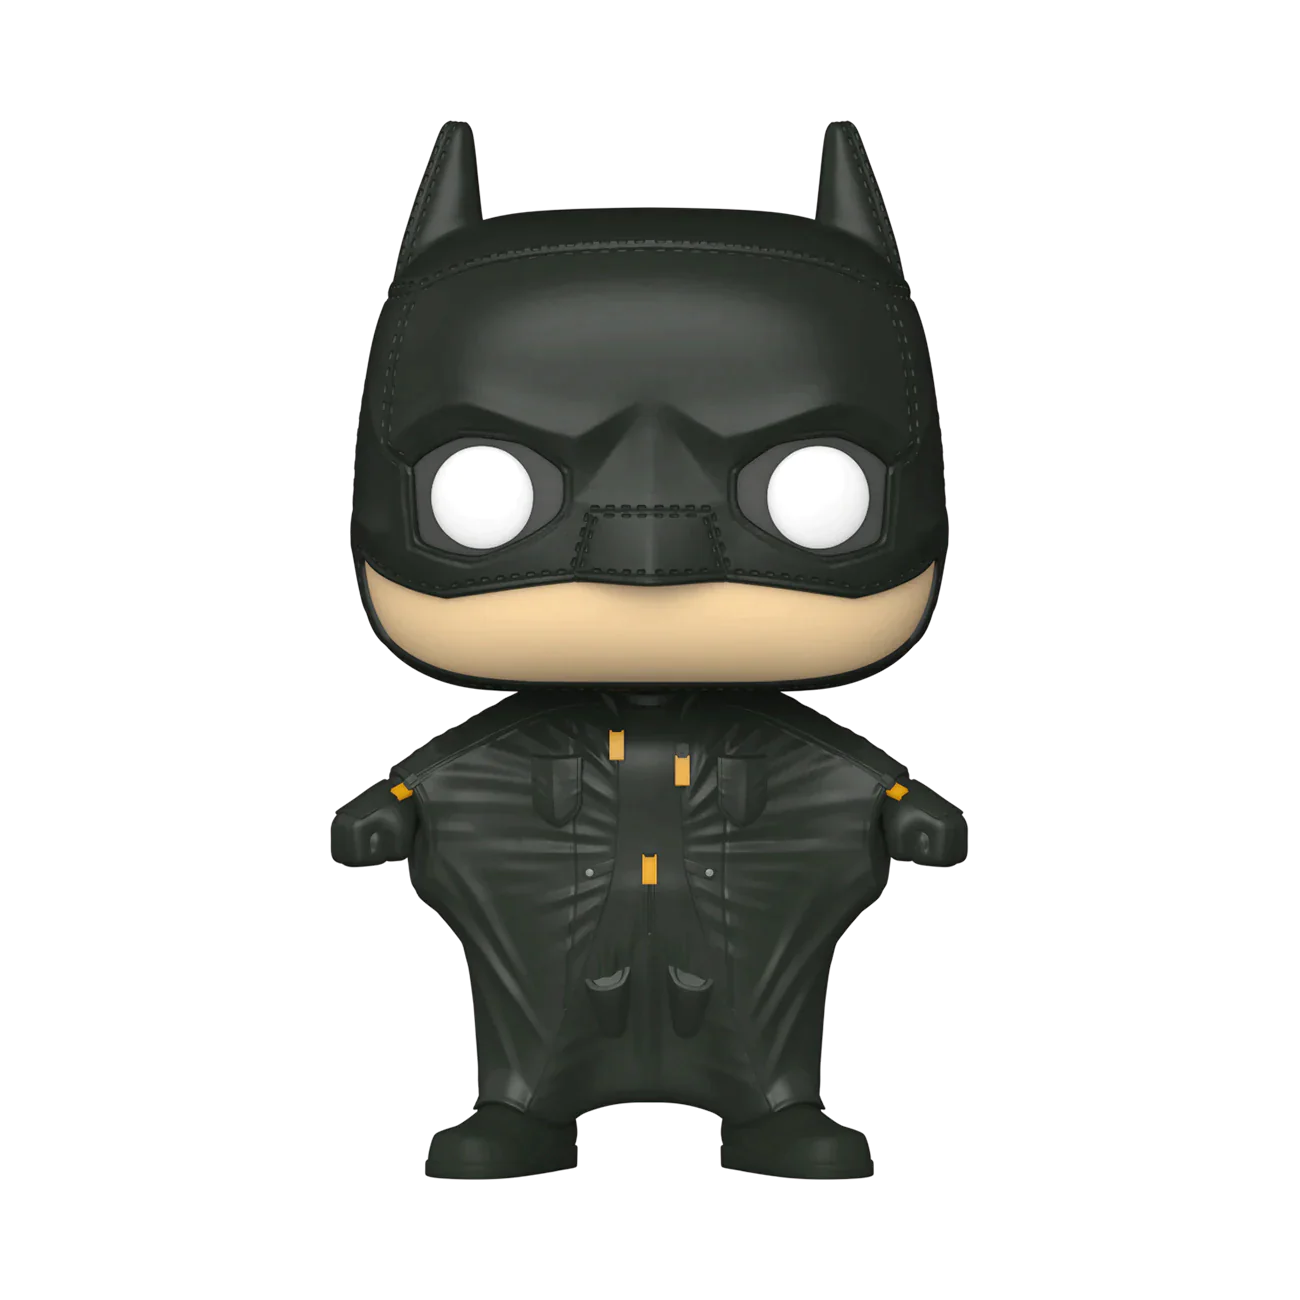 Funko Pop Movies: DC The Batman - Batman volando Exclusivo Funko Shop